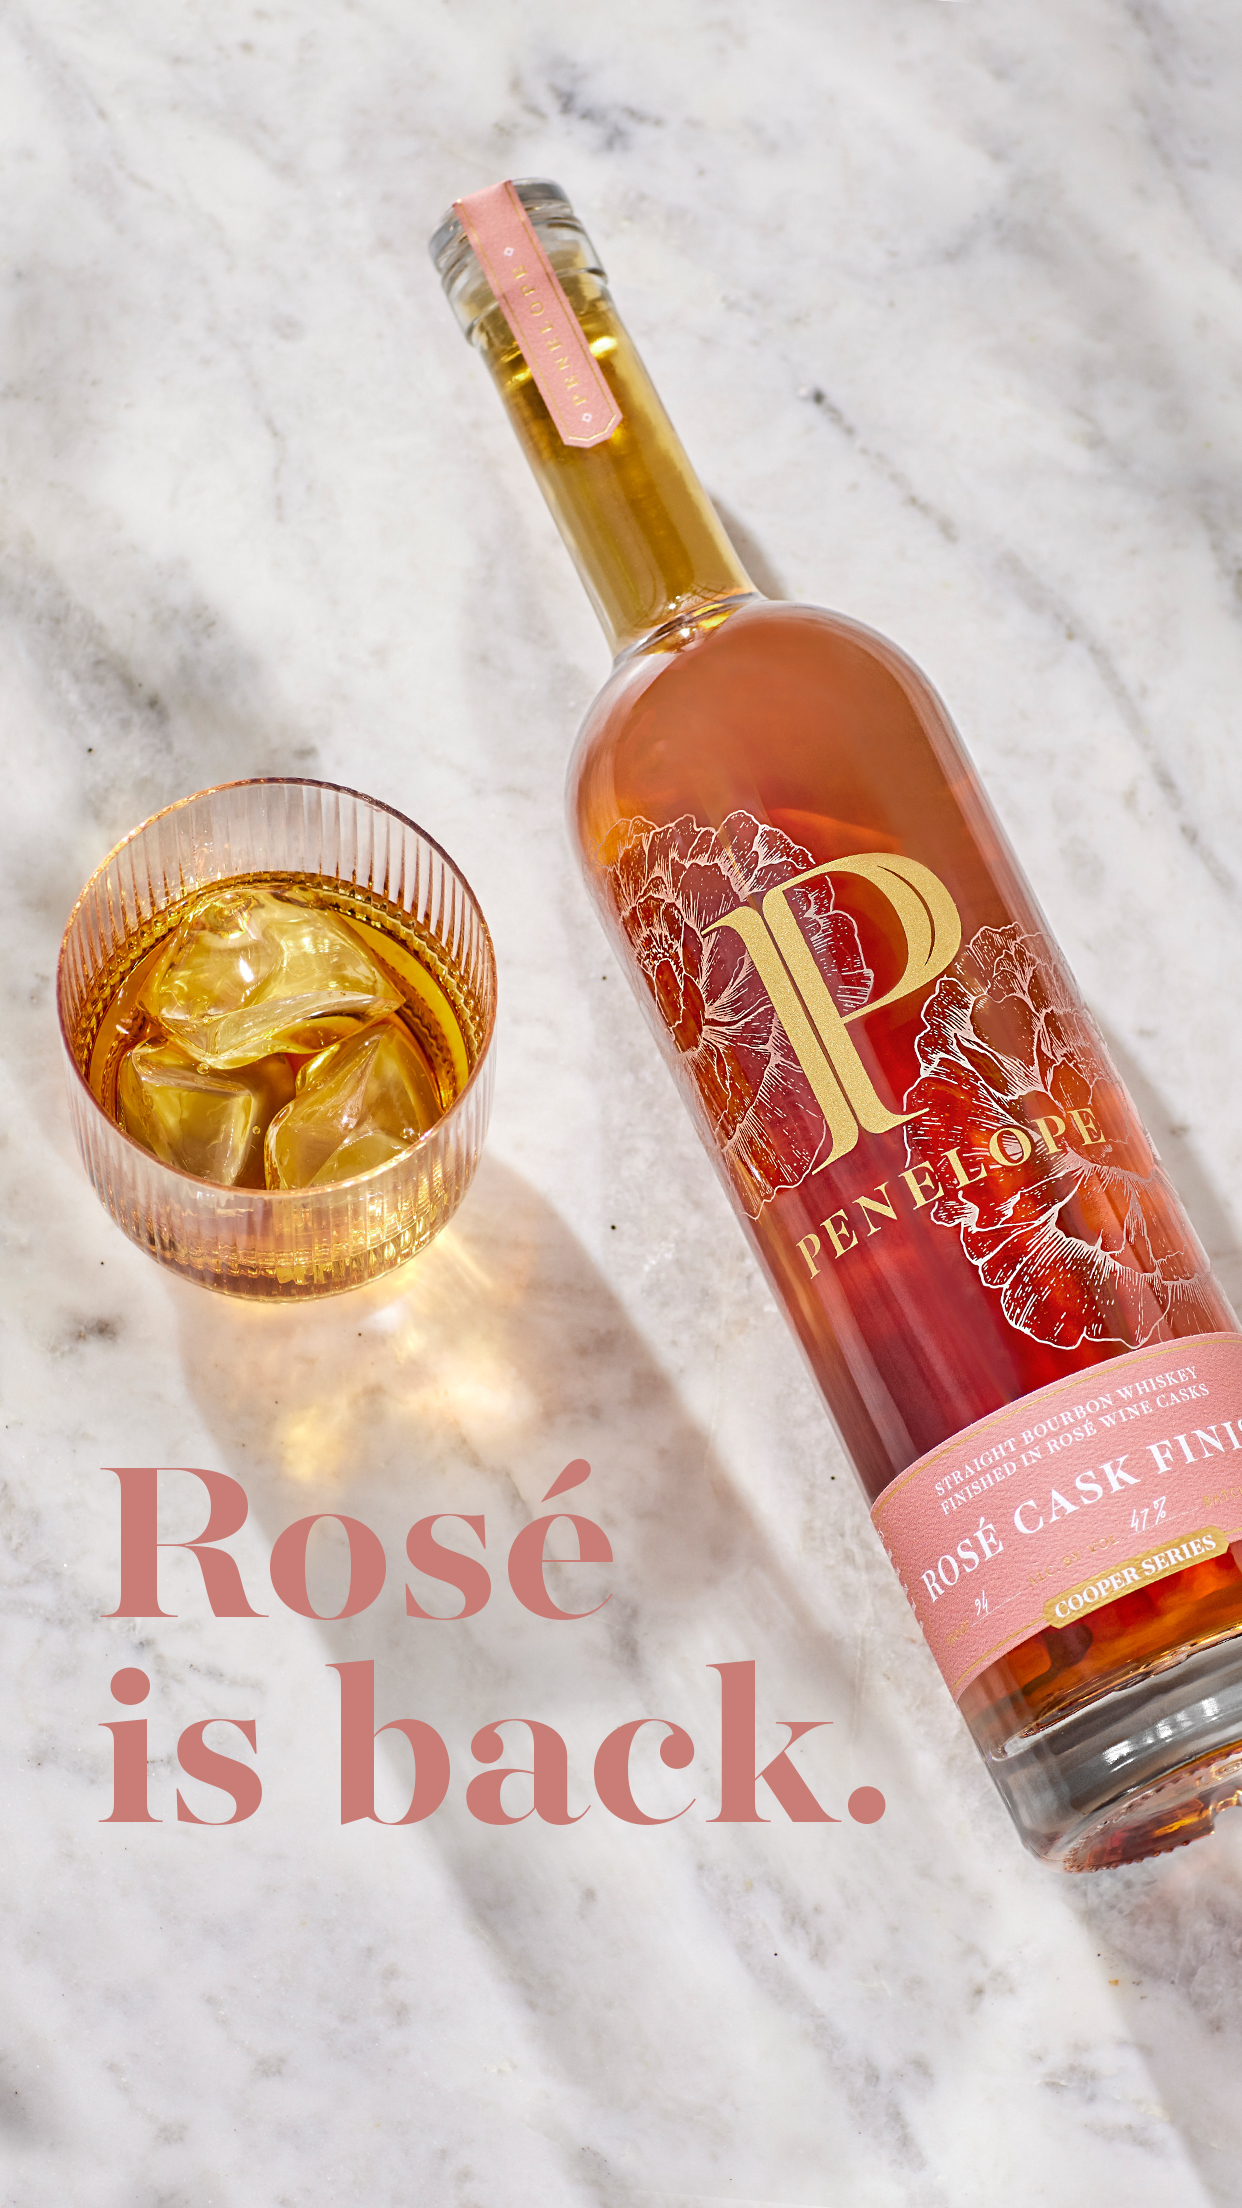 Penelope Bourbon Rosé Cask Finish Limited release Award-winning whiskey